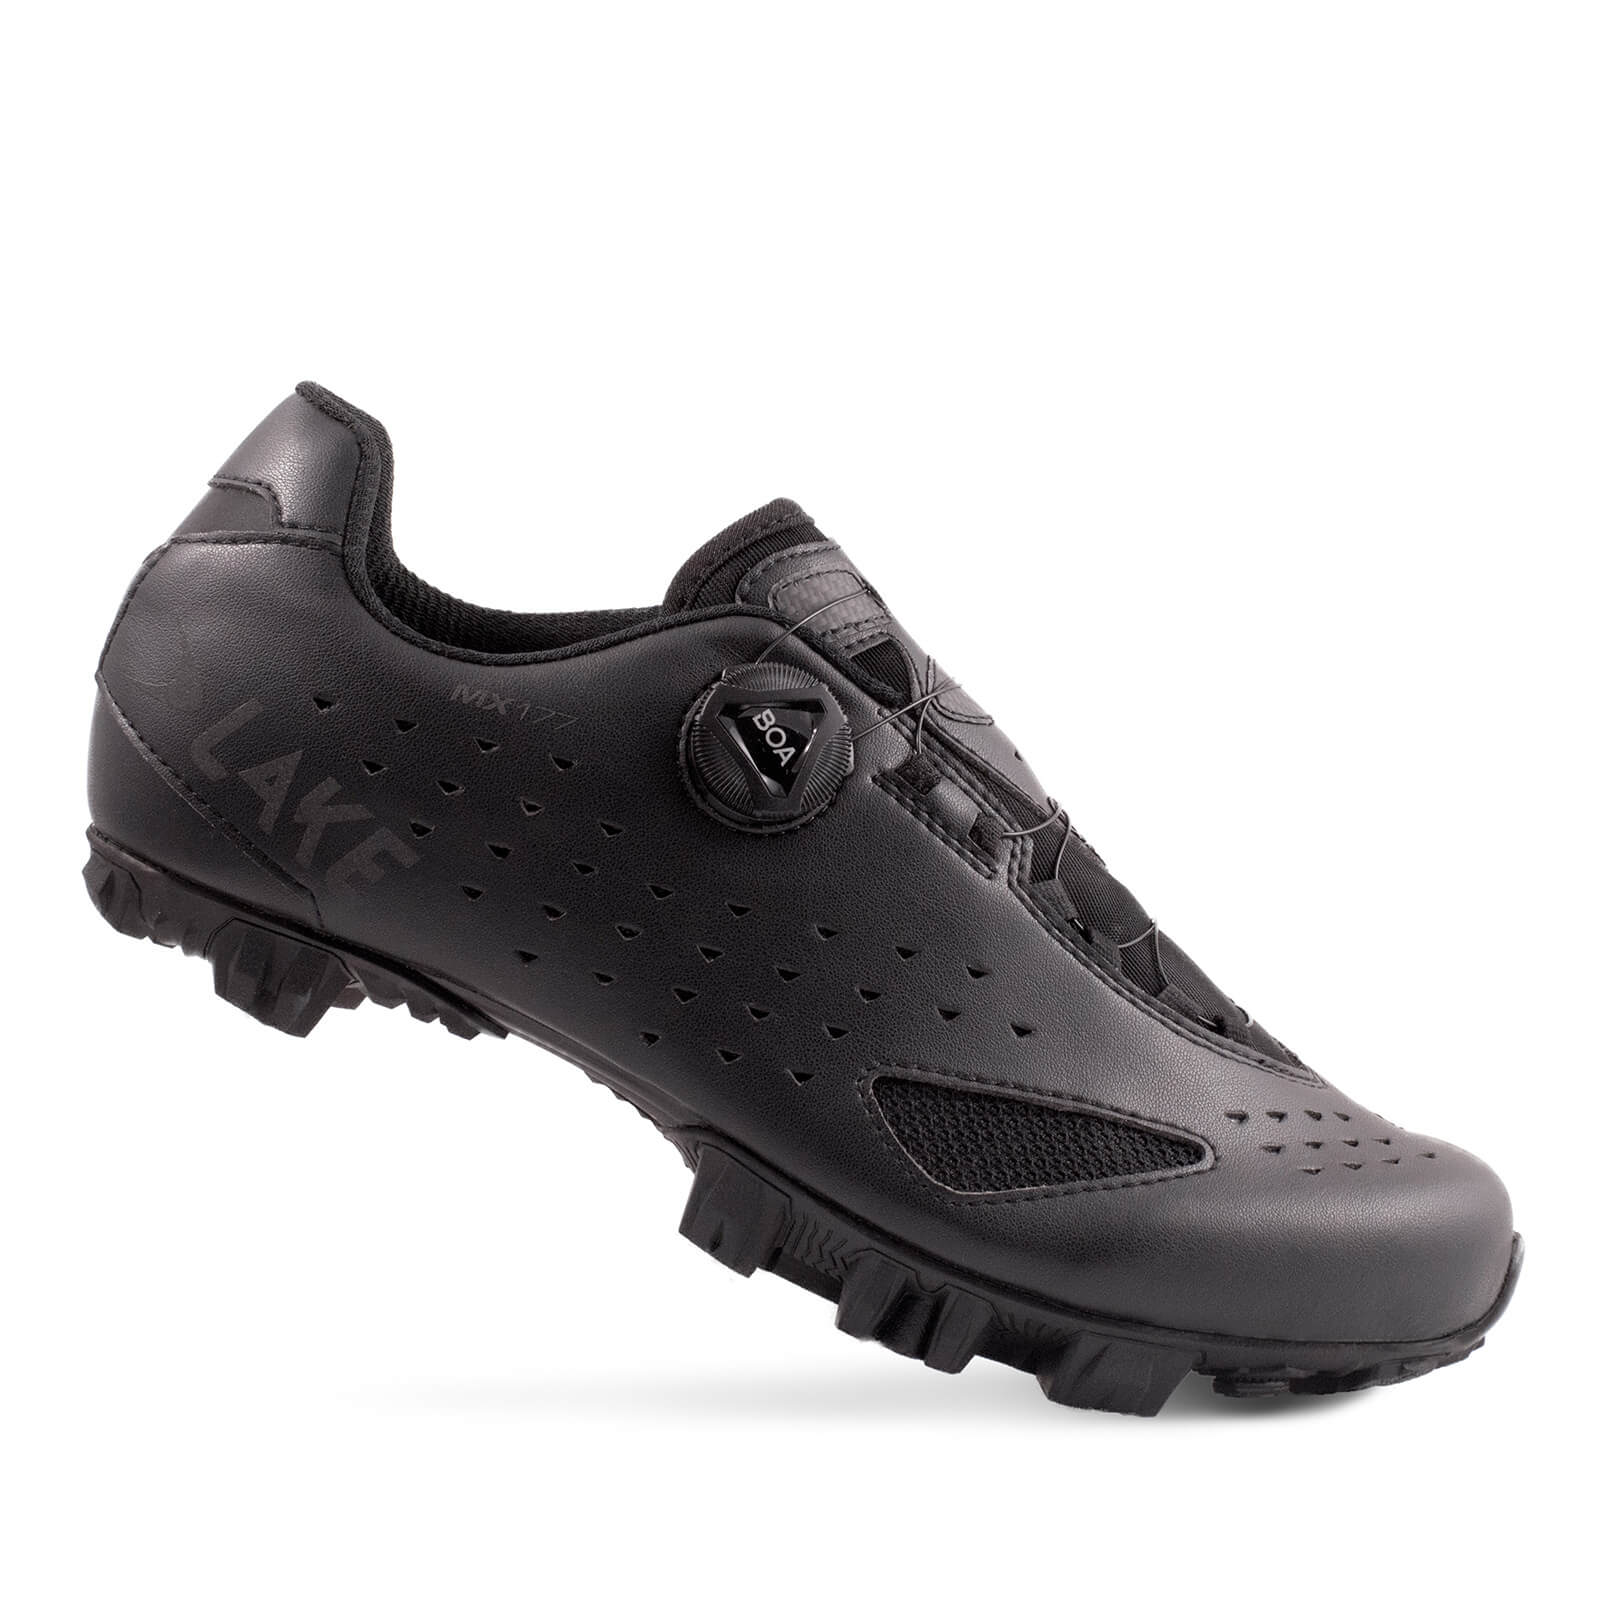 Lake MX177 MTB Shoes - EU45 - Black